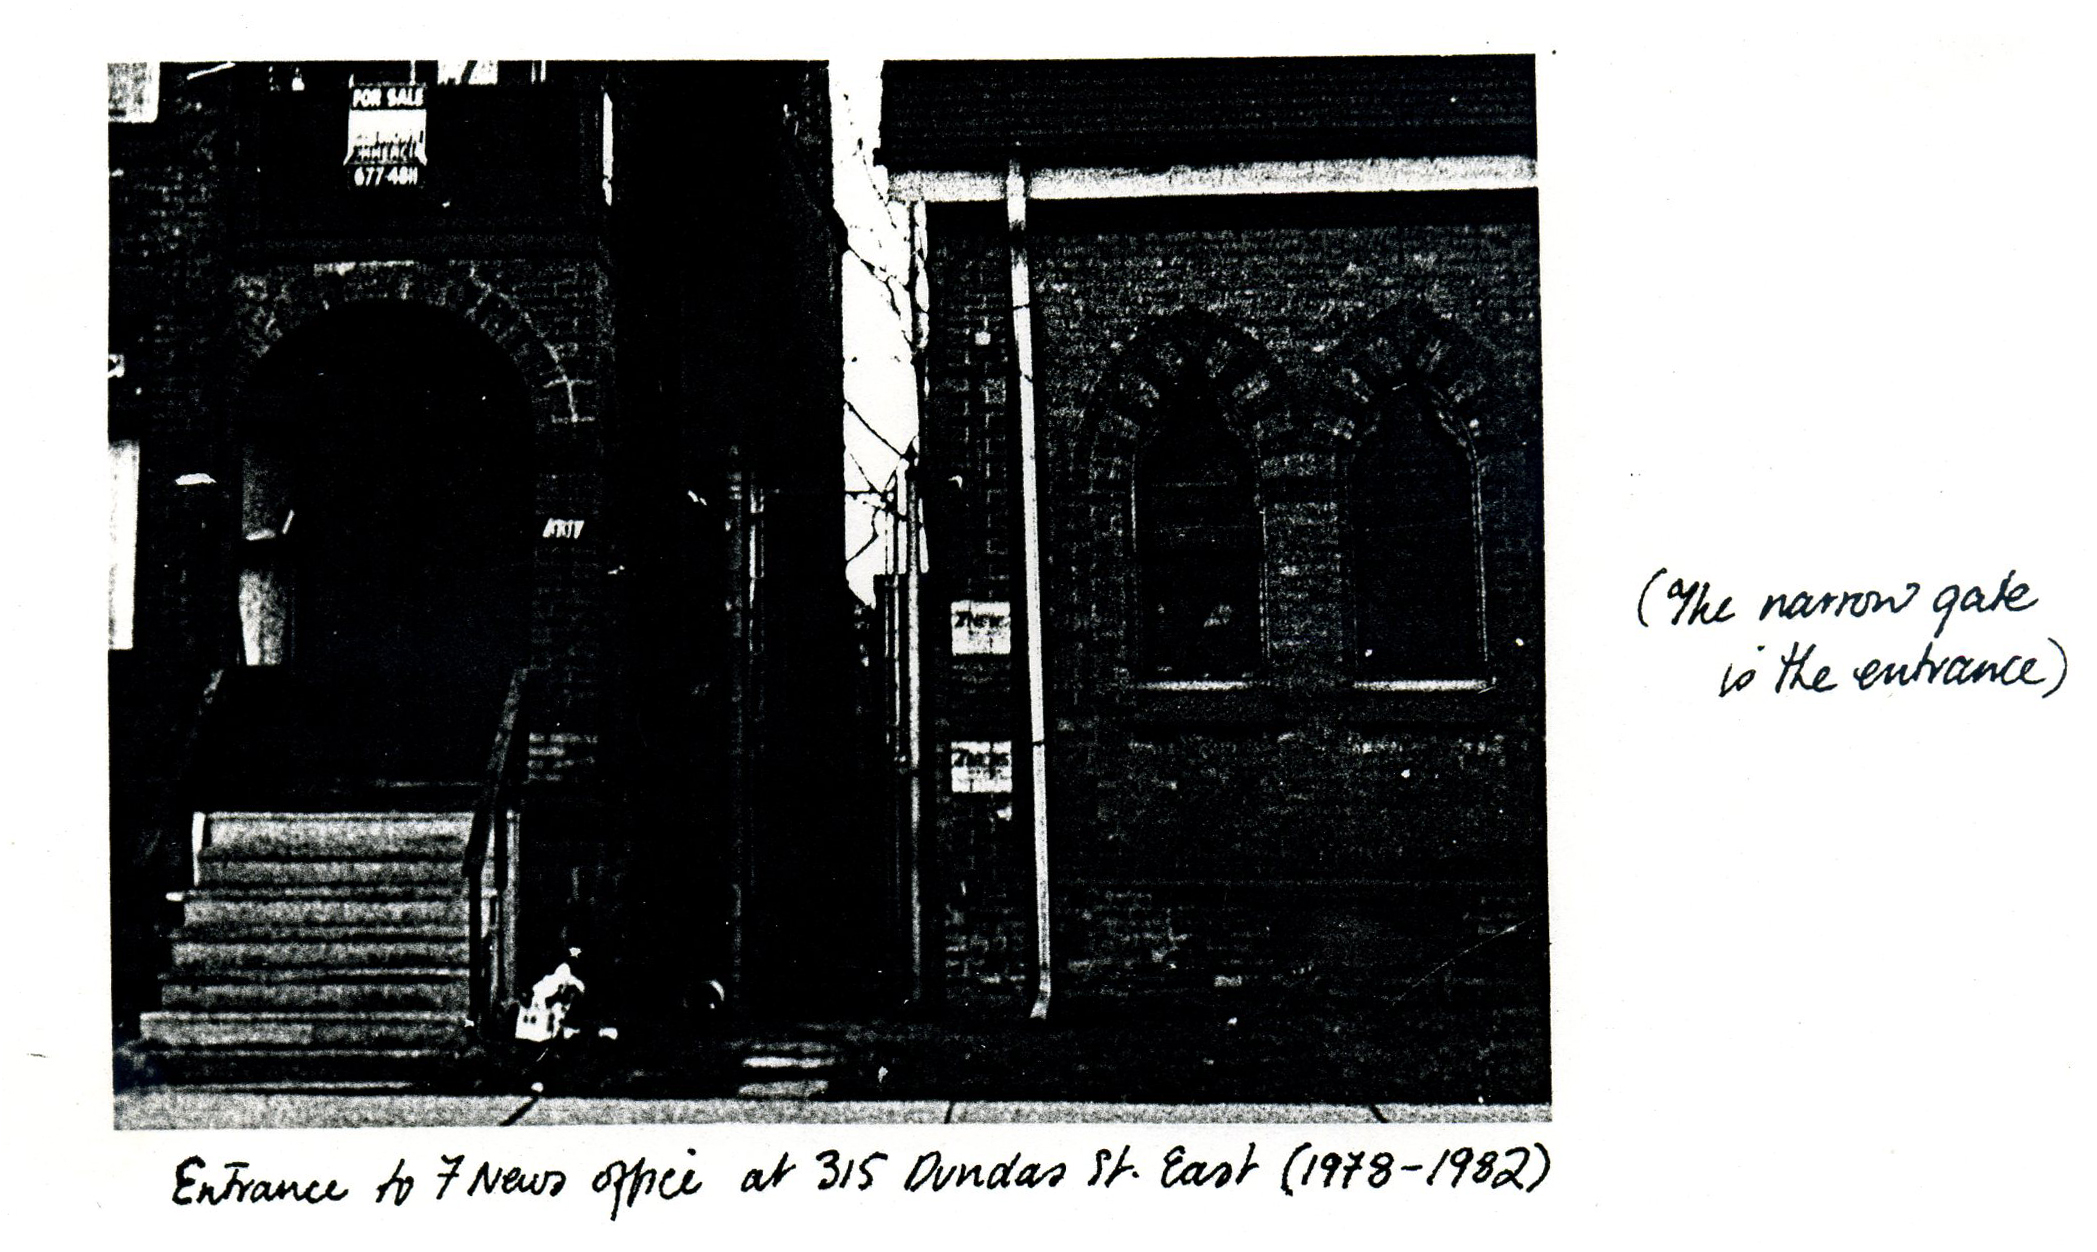 Entrance to 7 News office, 315 Dundas Street East, circa 1979